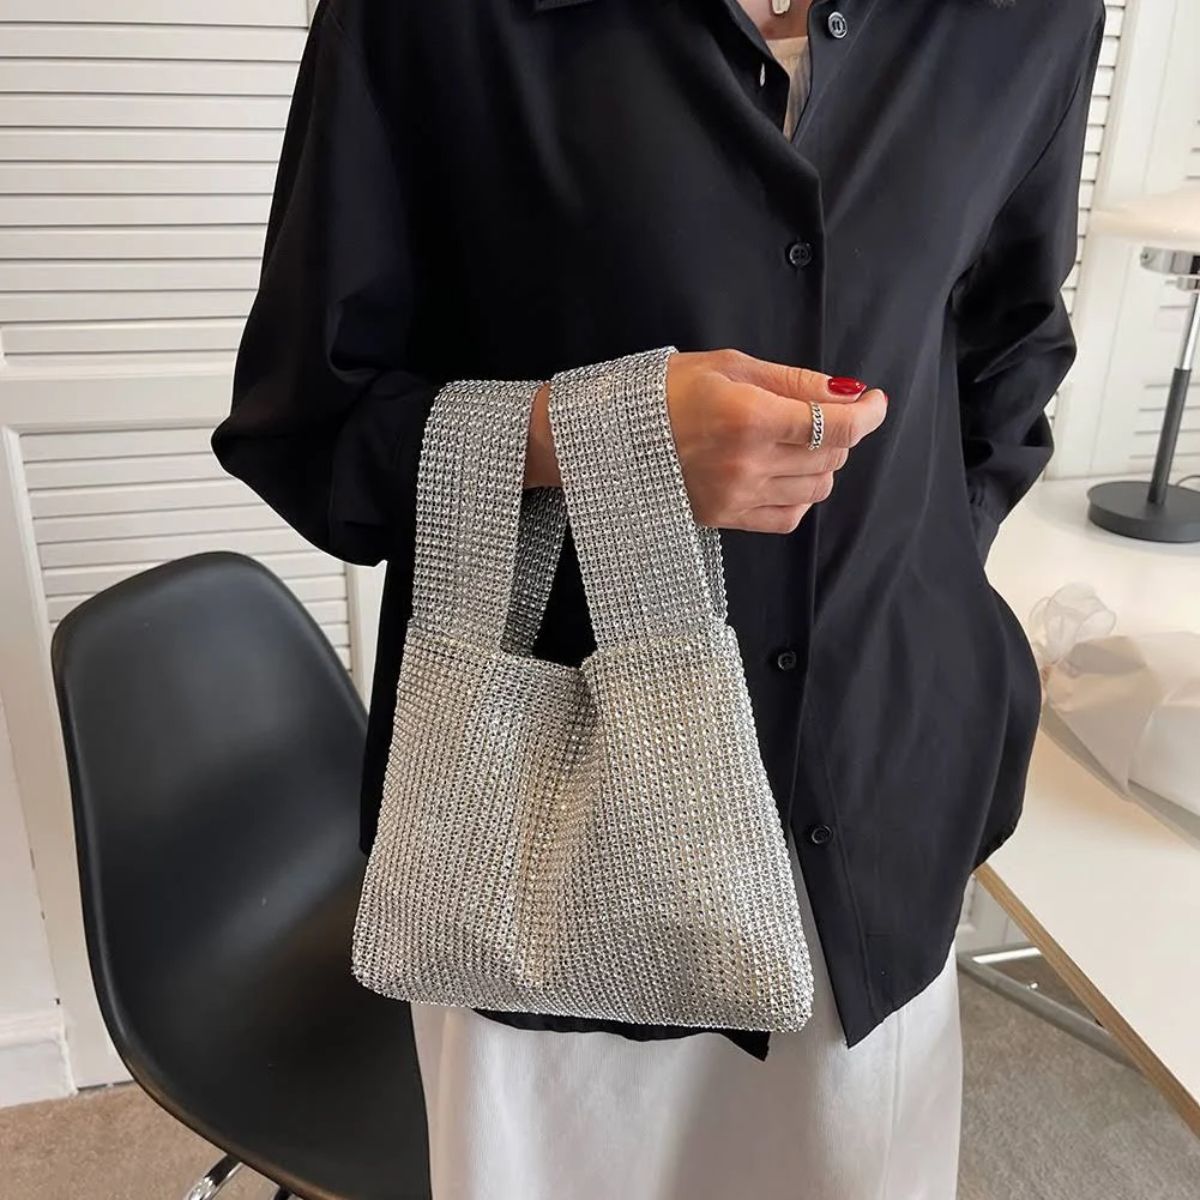 Rhinestones Purse for Women Shopping Bag Style